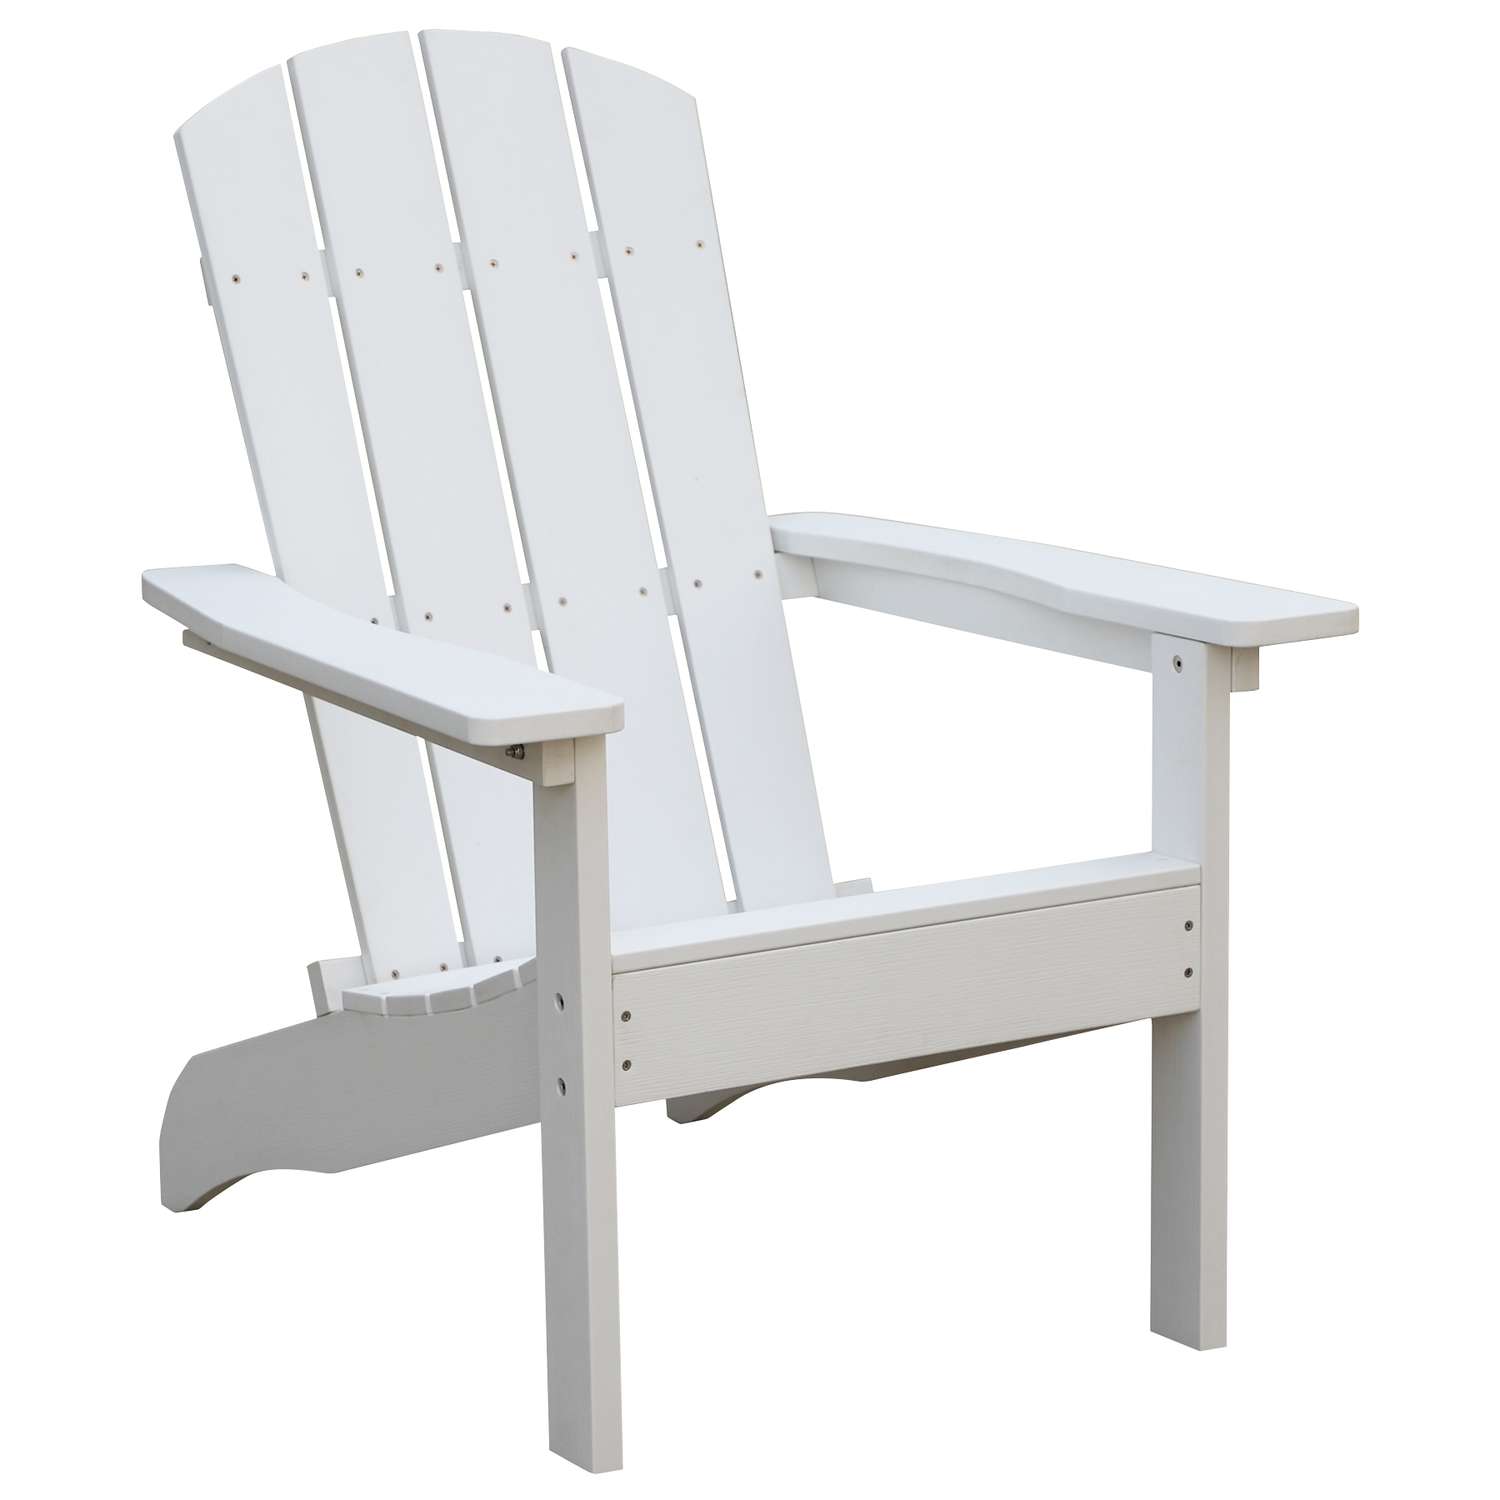 Living Accents White Resin Adirondack, Ace Hardware Adirondack Chair Kit